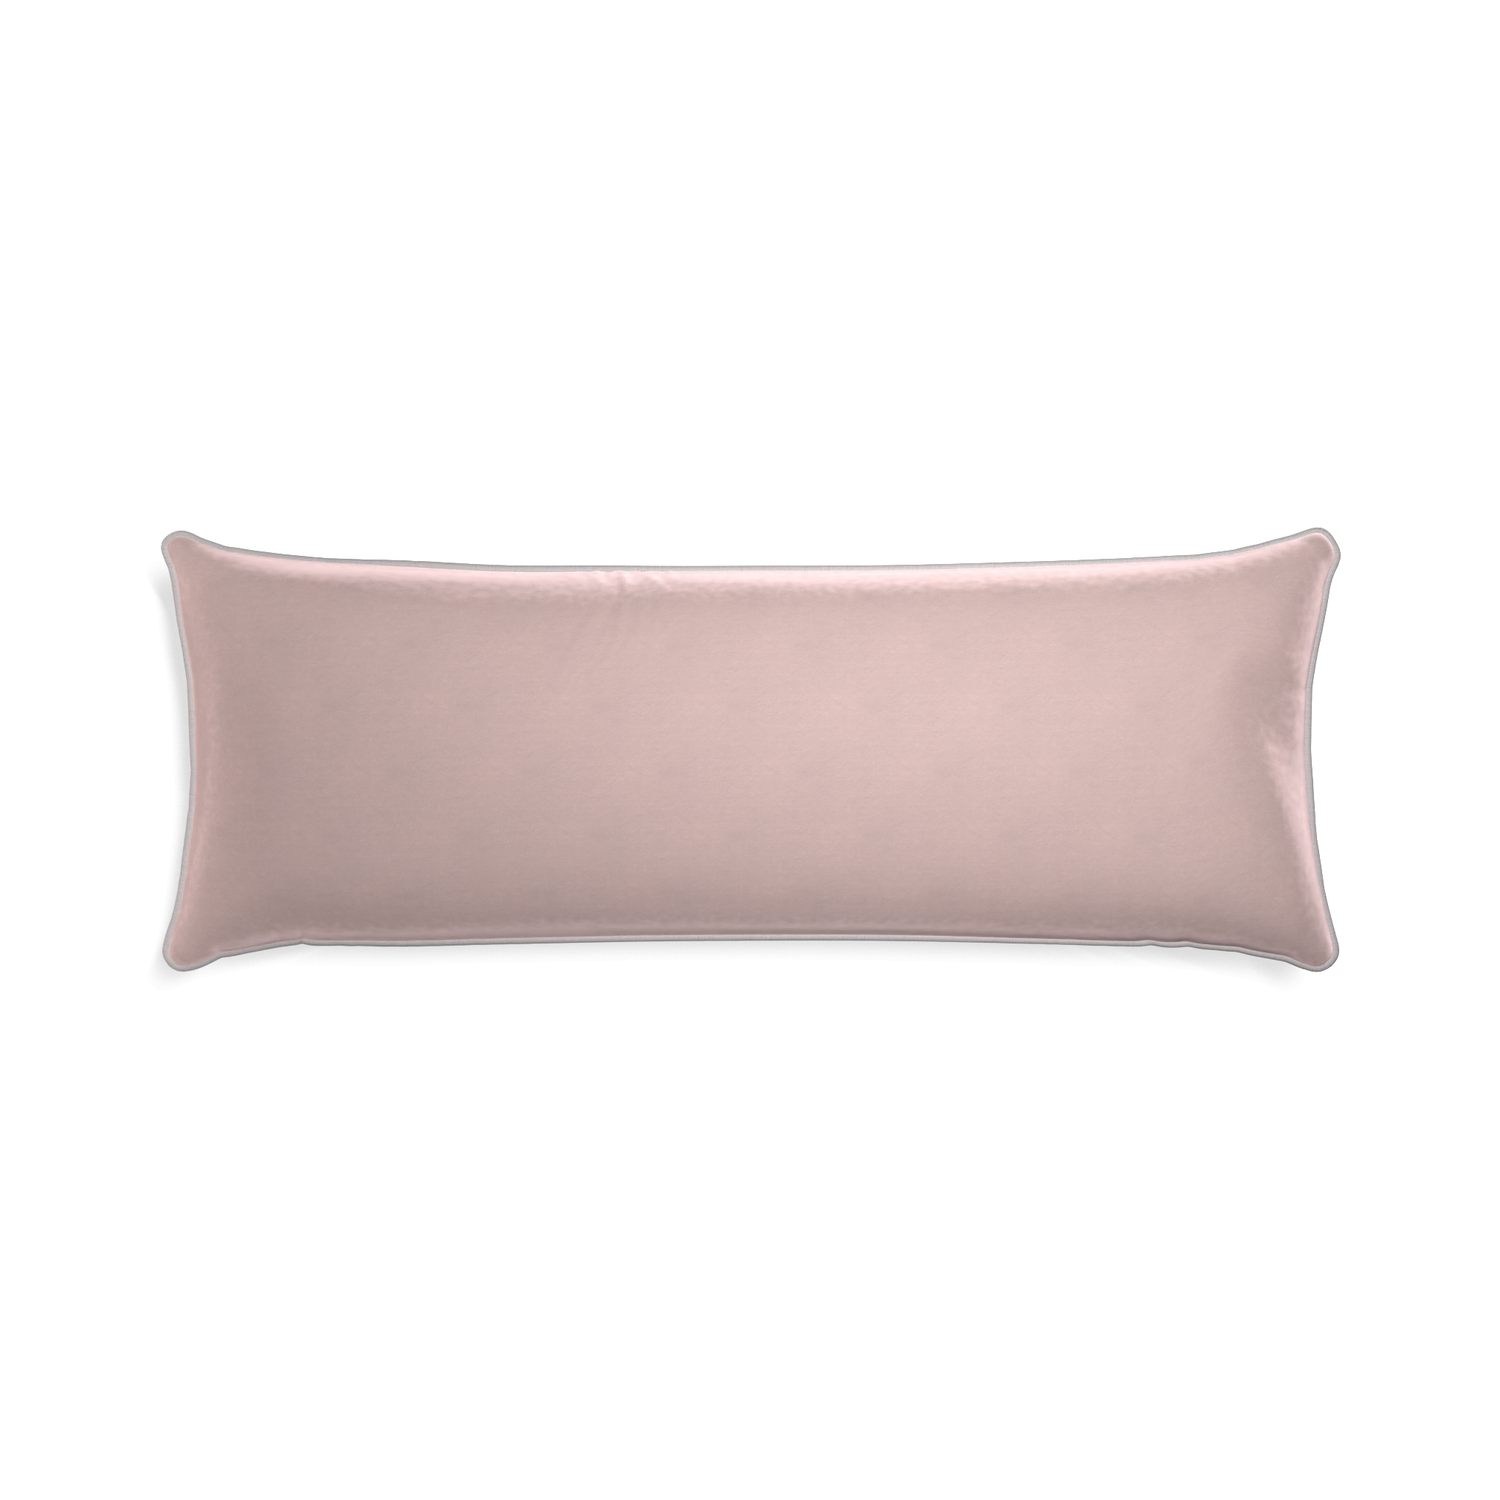 Xl-lumbar rose velvet custom pillow with pebble piping on white background